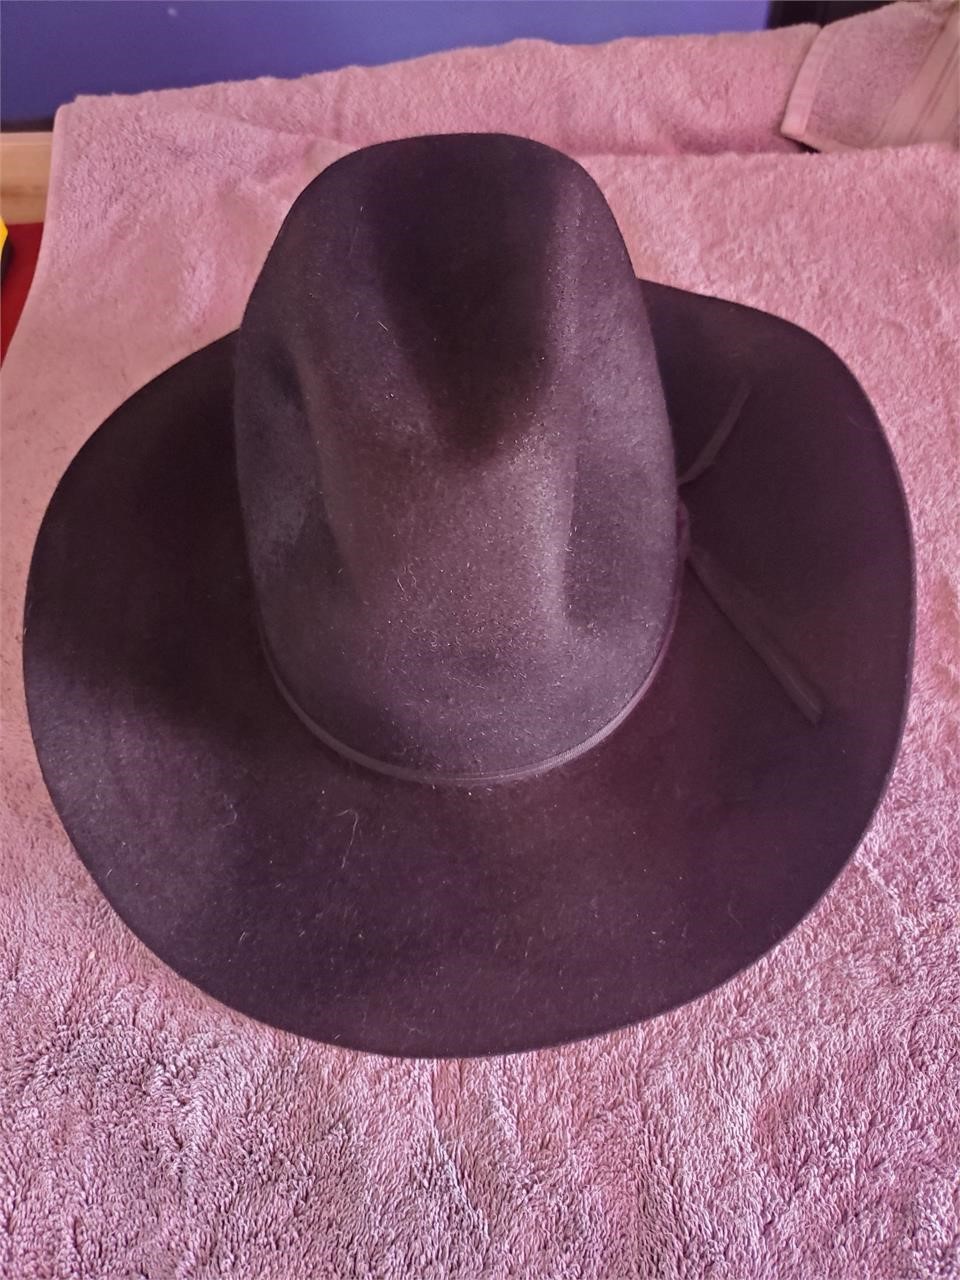 Black Size 7 Cowboy Hat